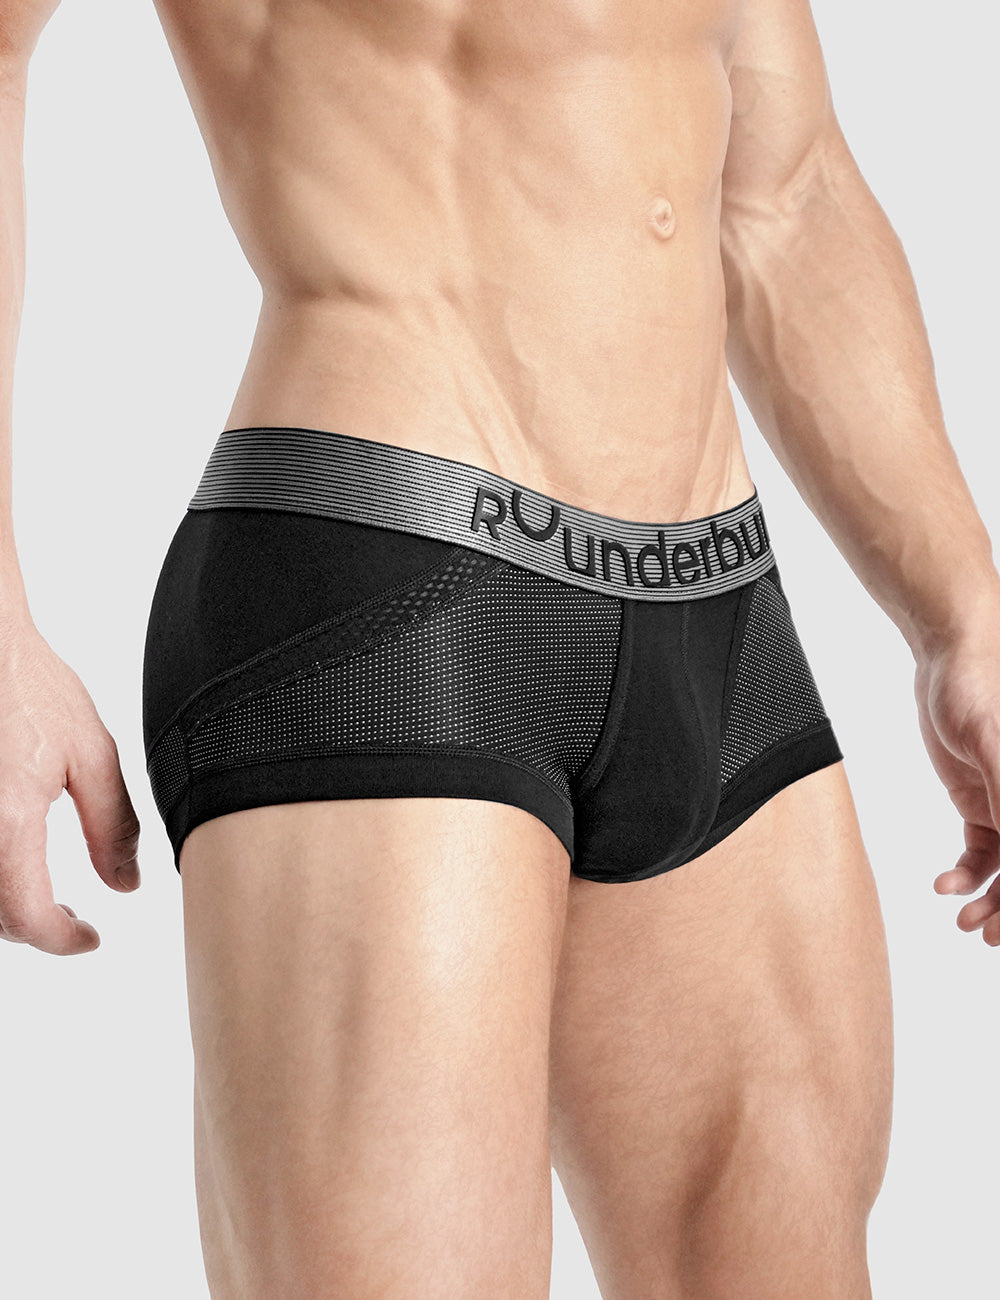 Padded Butt Shapewear Briefs Men - Rounderbum Underwear